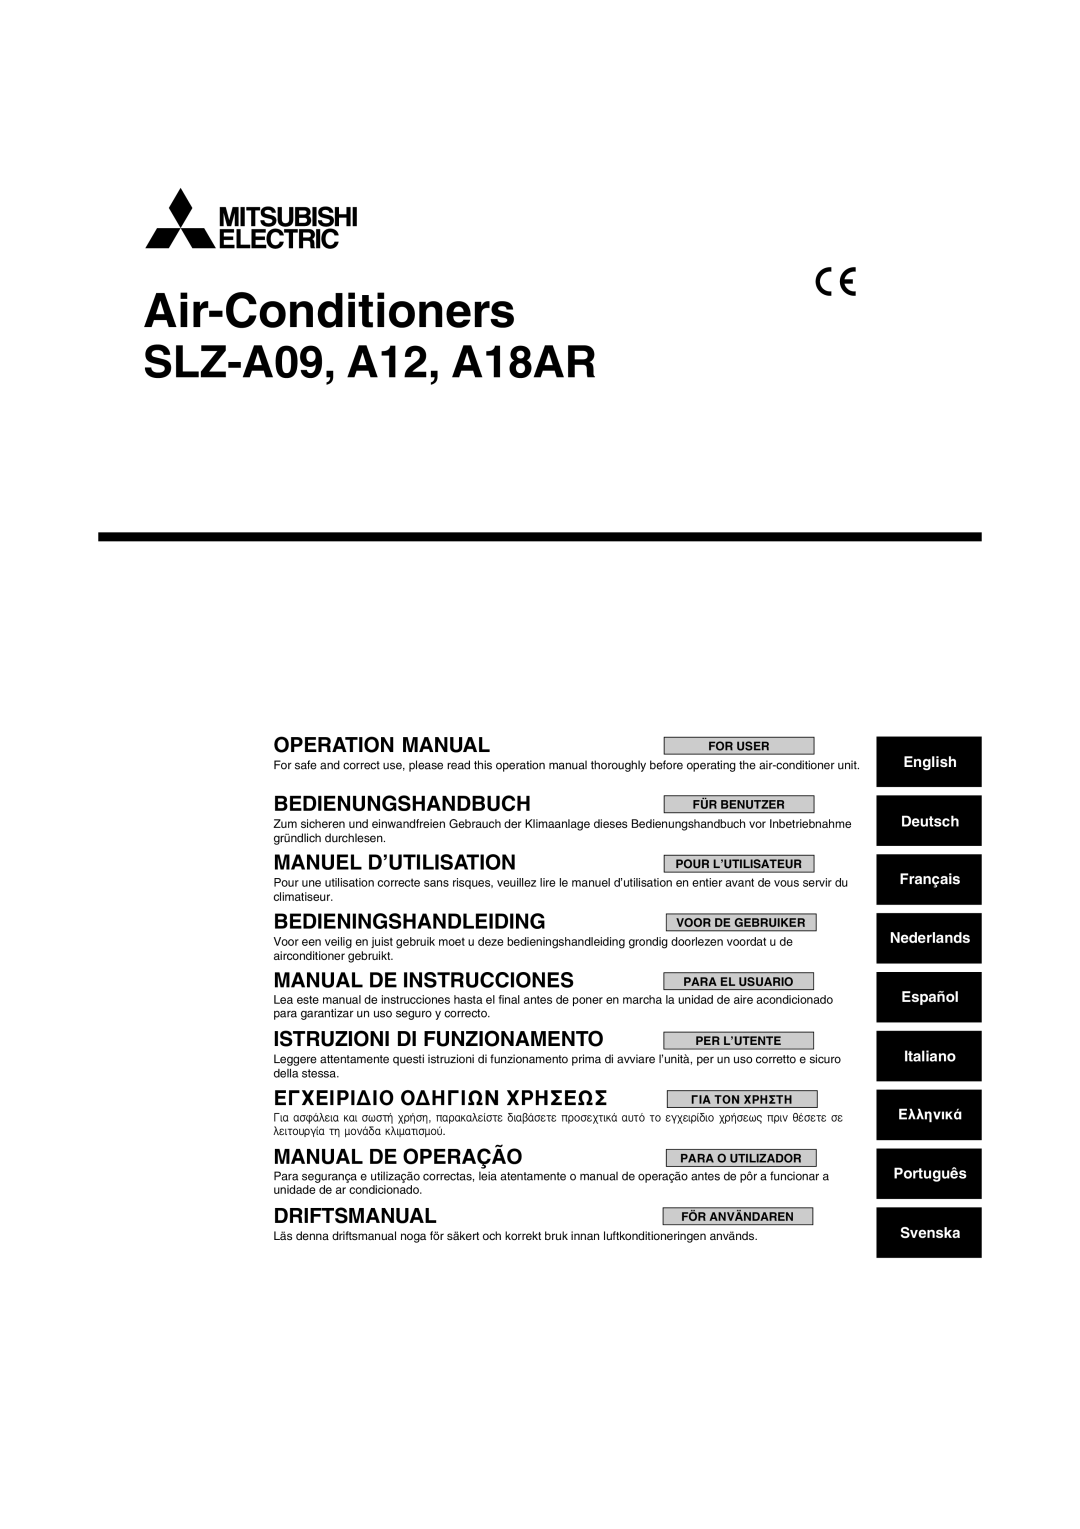 Mitsubishi Electronics operation manual Air-Conditioners, SLZ-A09, A12, A18AR, Operation Manual, Bedienungshandbuch 